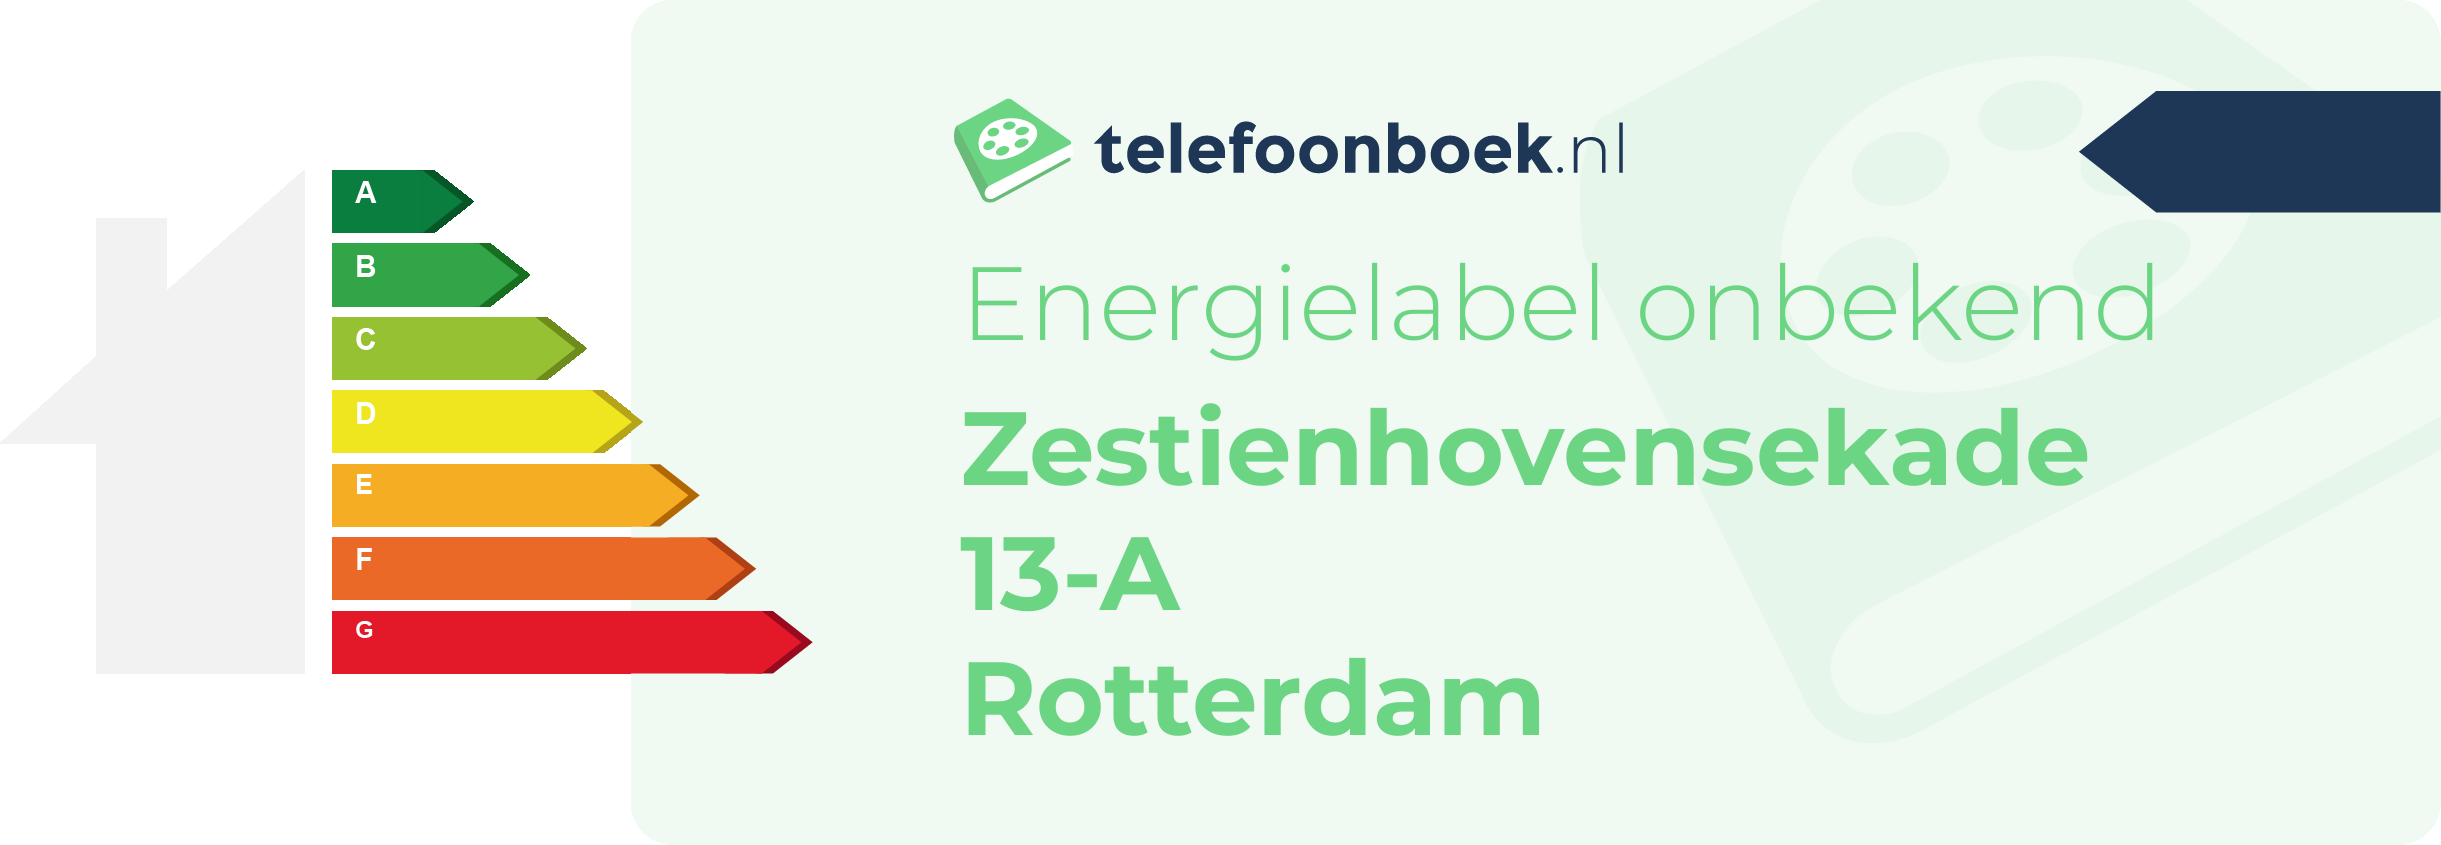 Energielabel Zestienhovensekade 13-A Rotterdam